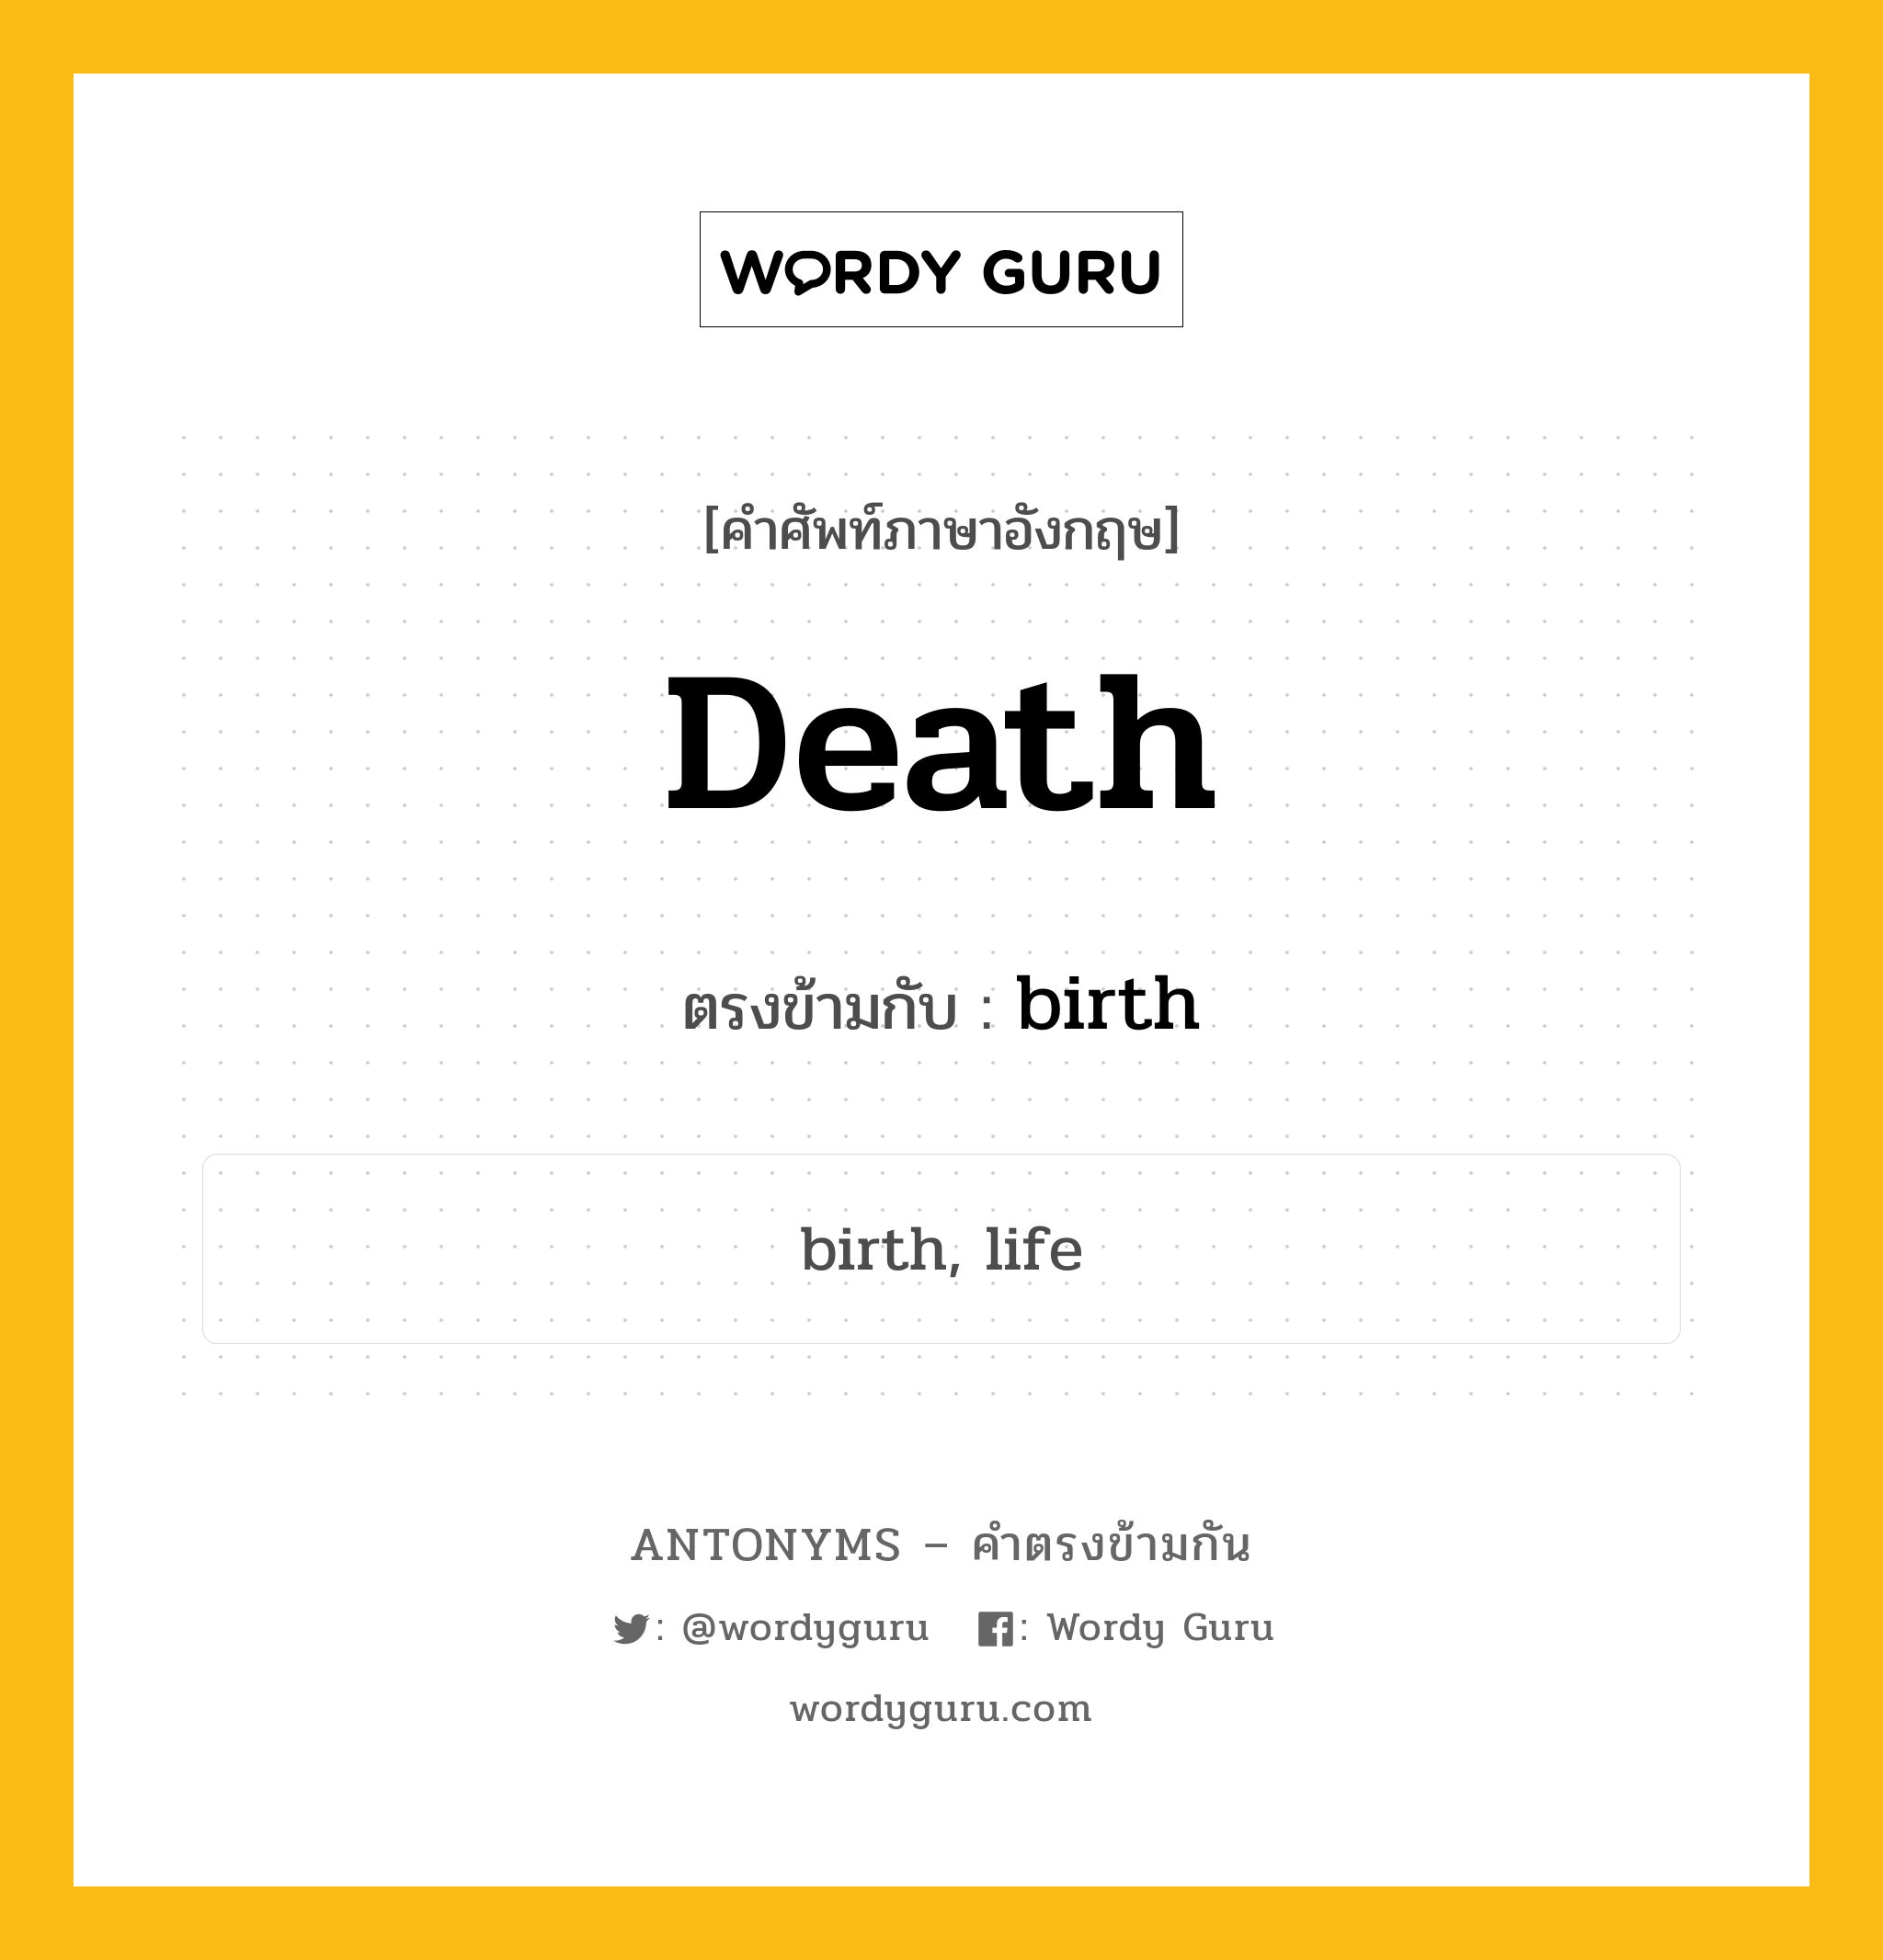 death เป็นคำตรงข้ามกับคำไหนบ้าง?, คำศัพท์ภาษาอังกฤษ death ตรงข้ามกับ birth หมวด birth